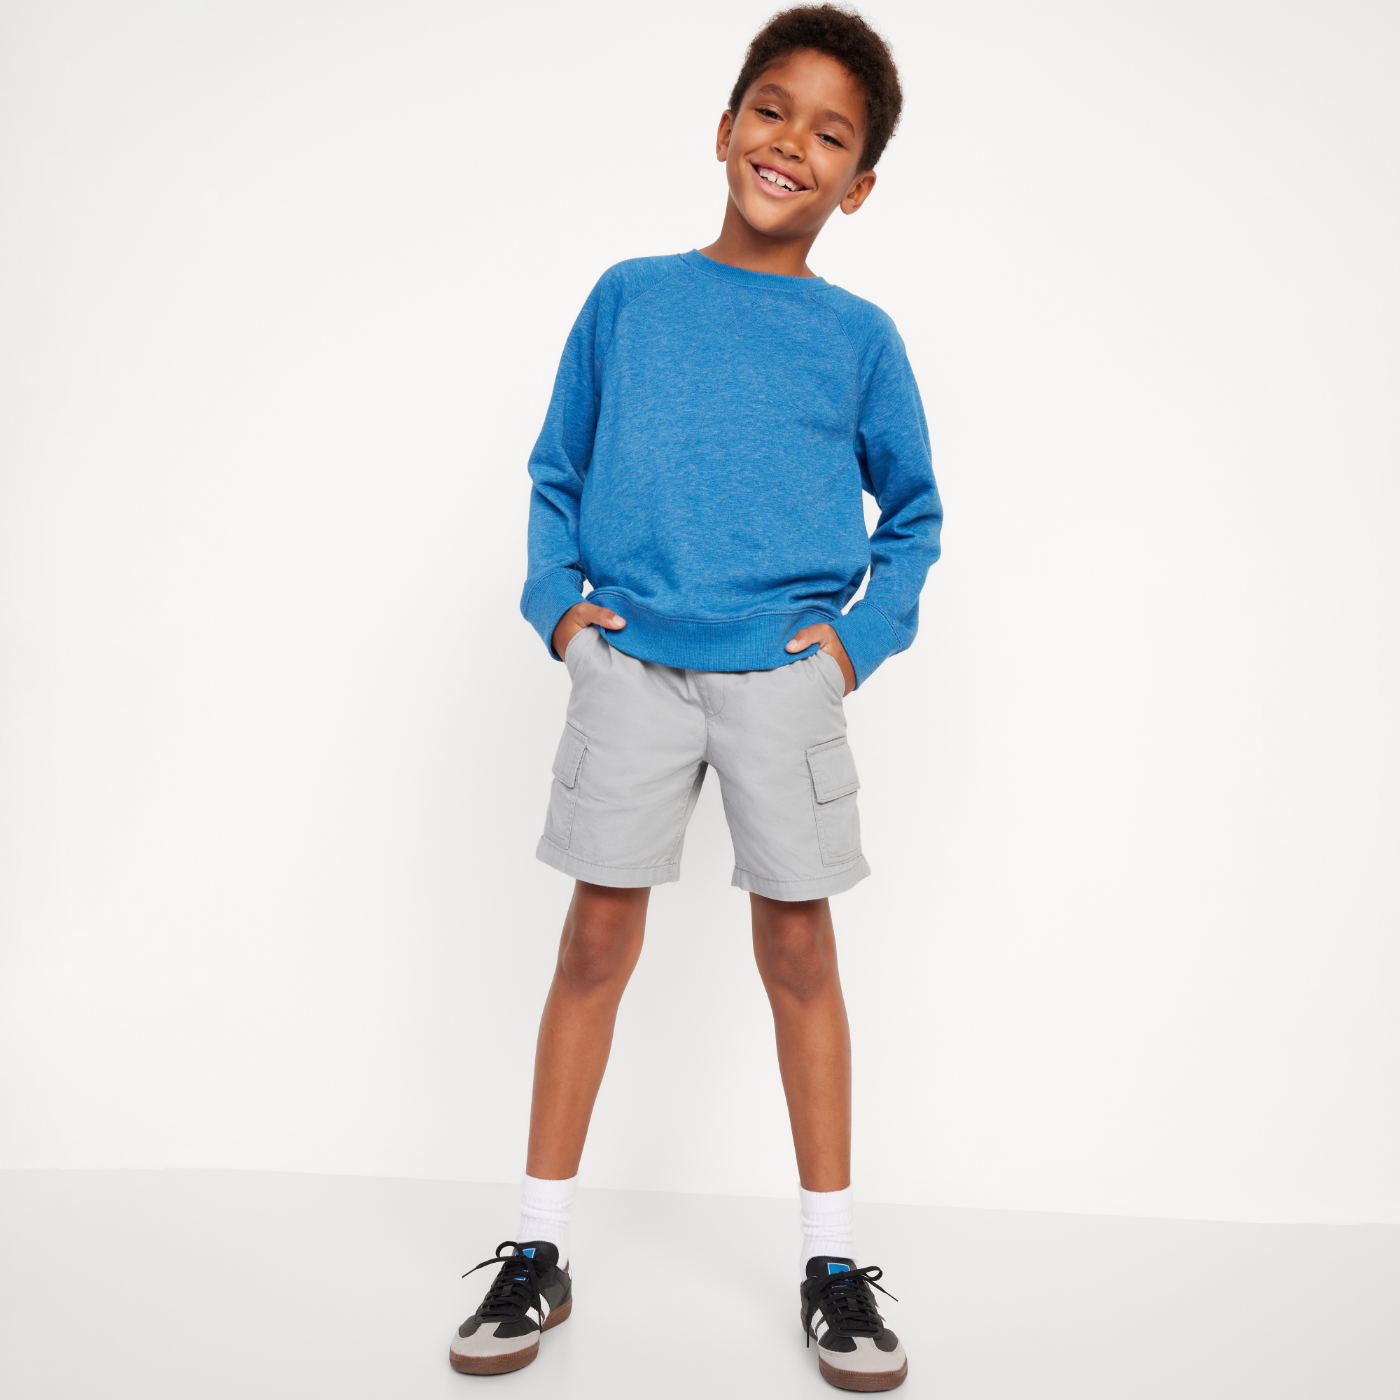 Young boy model wearing blue crewneck long-sleeve t-shirt and grey cargo shorts.